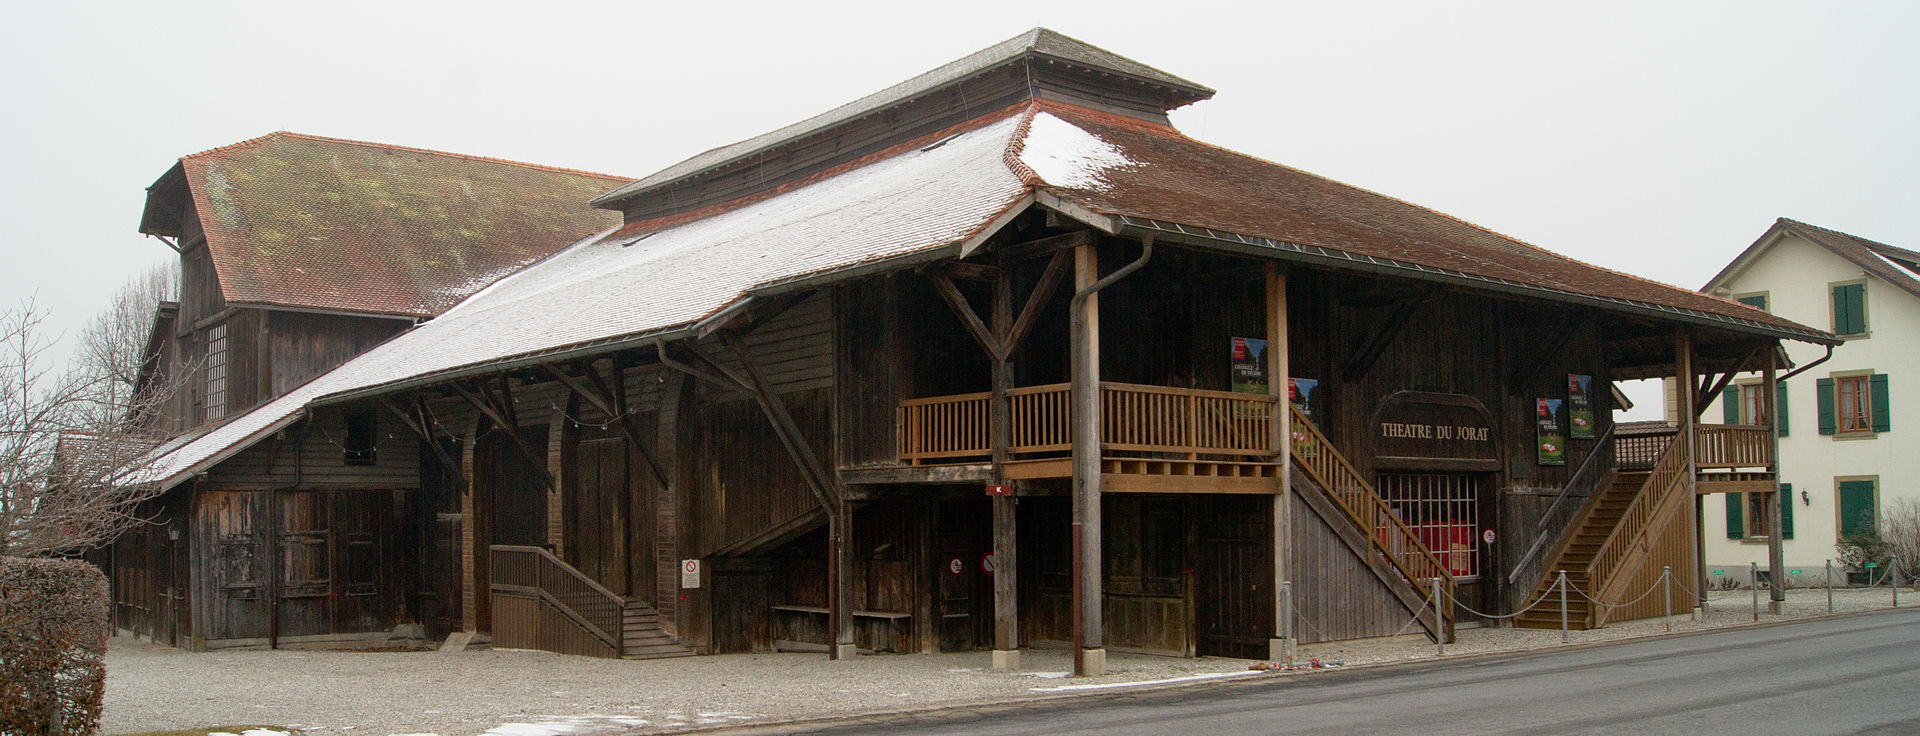 Bild Théâtre du Jorat Mézières